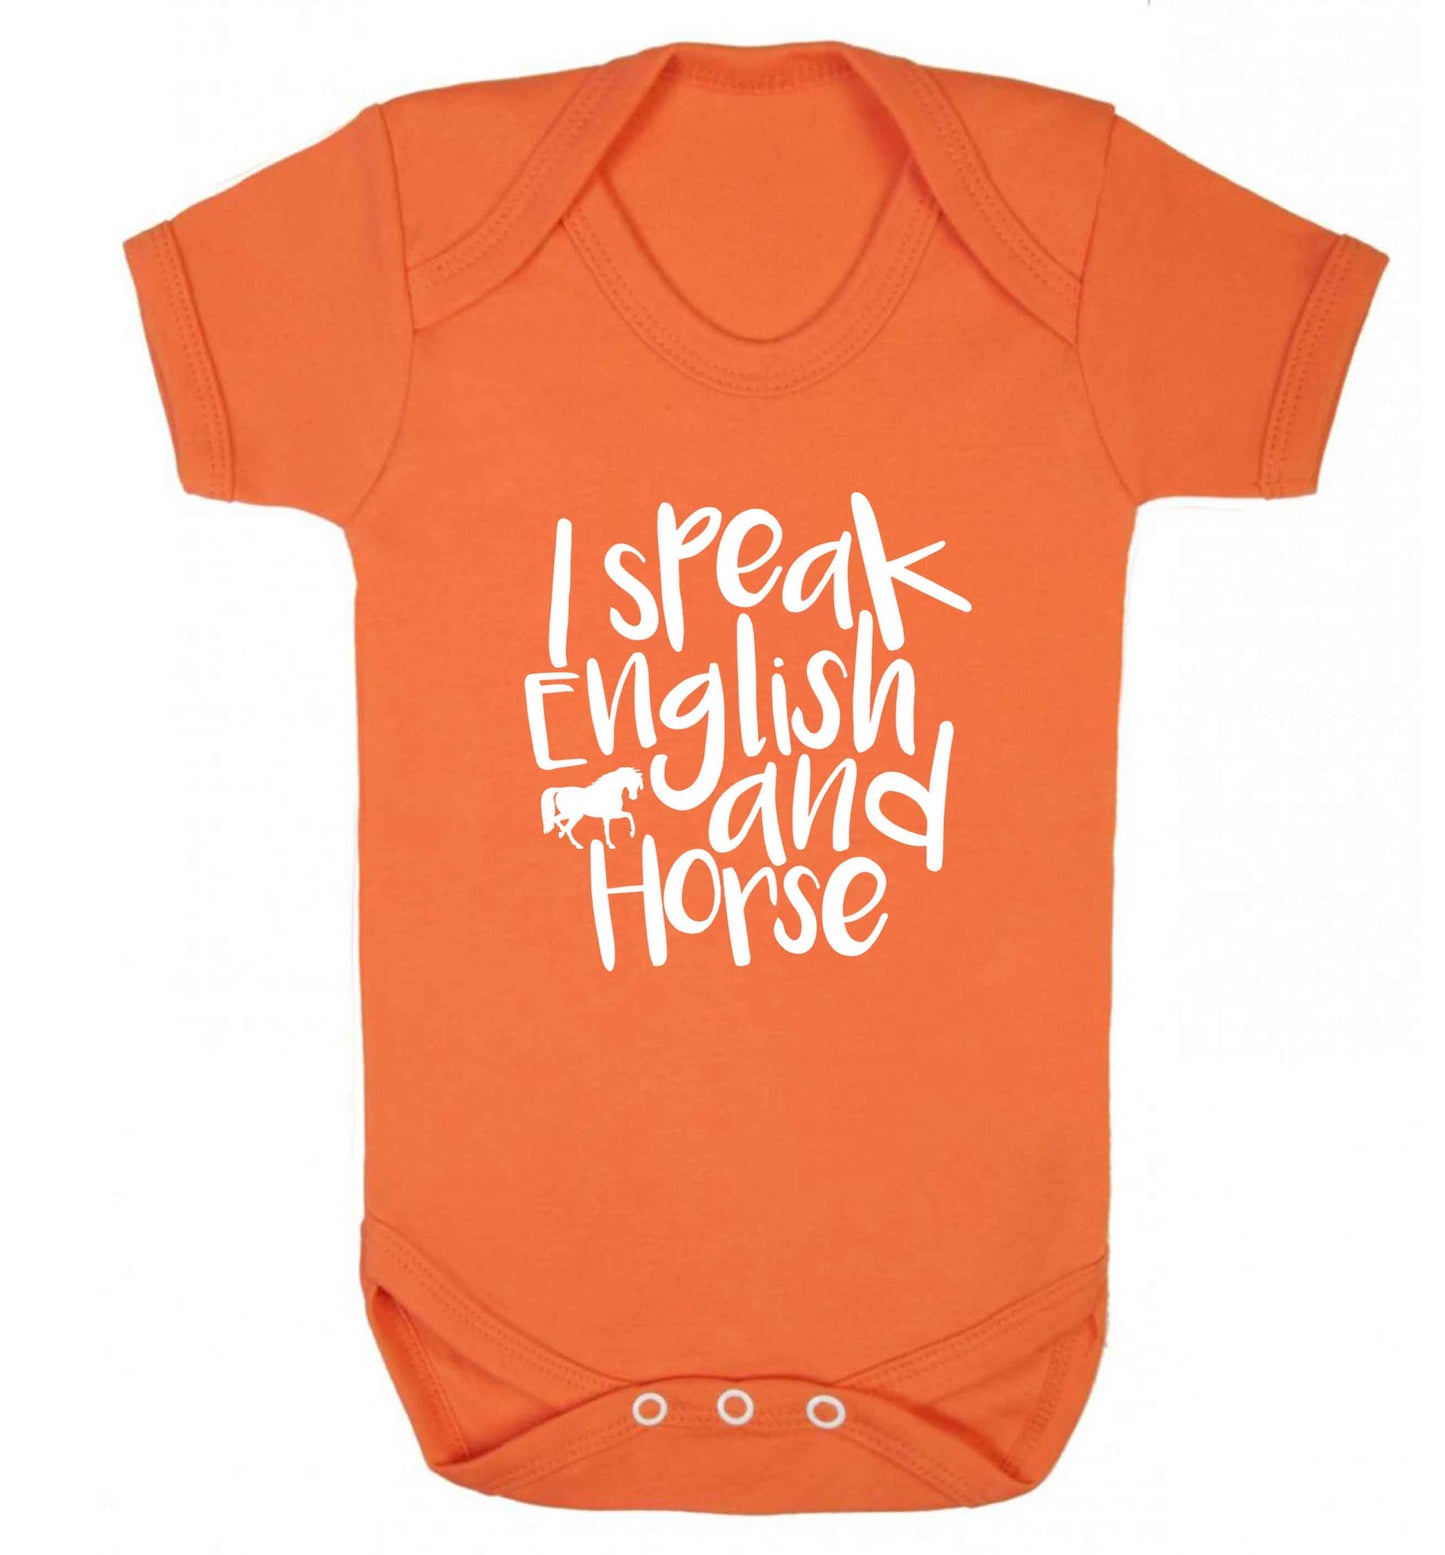 I speak English and horse baby vest orange 18-24 months